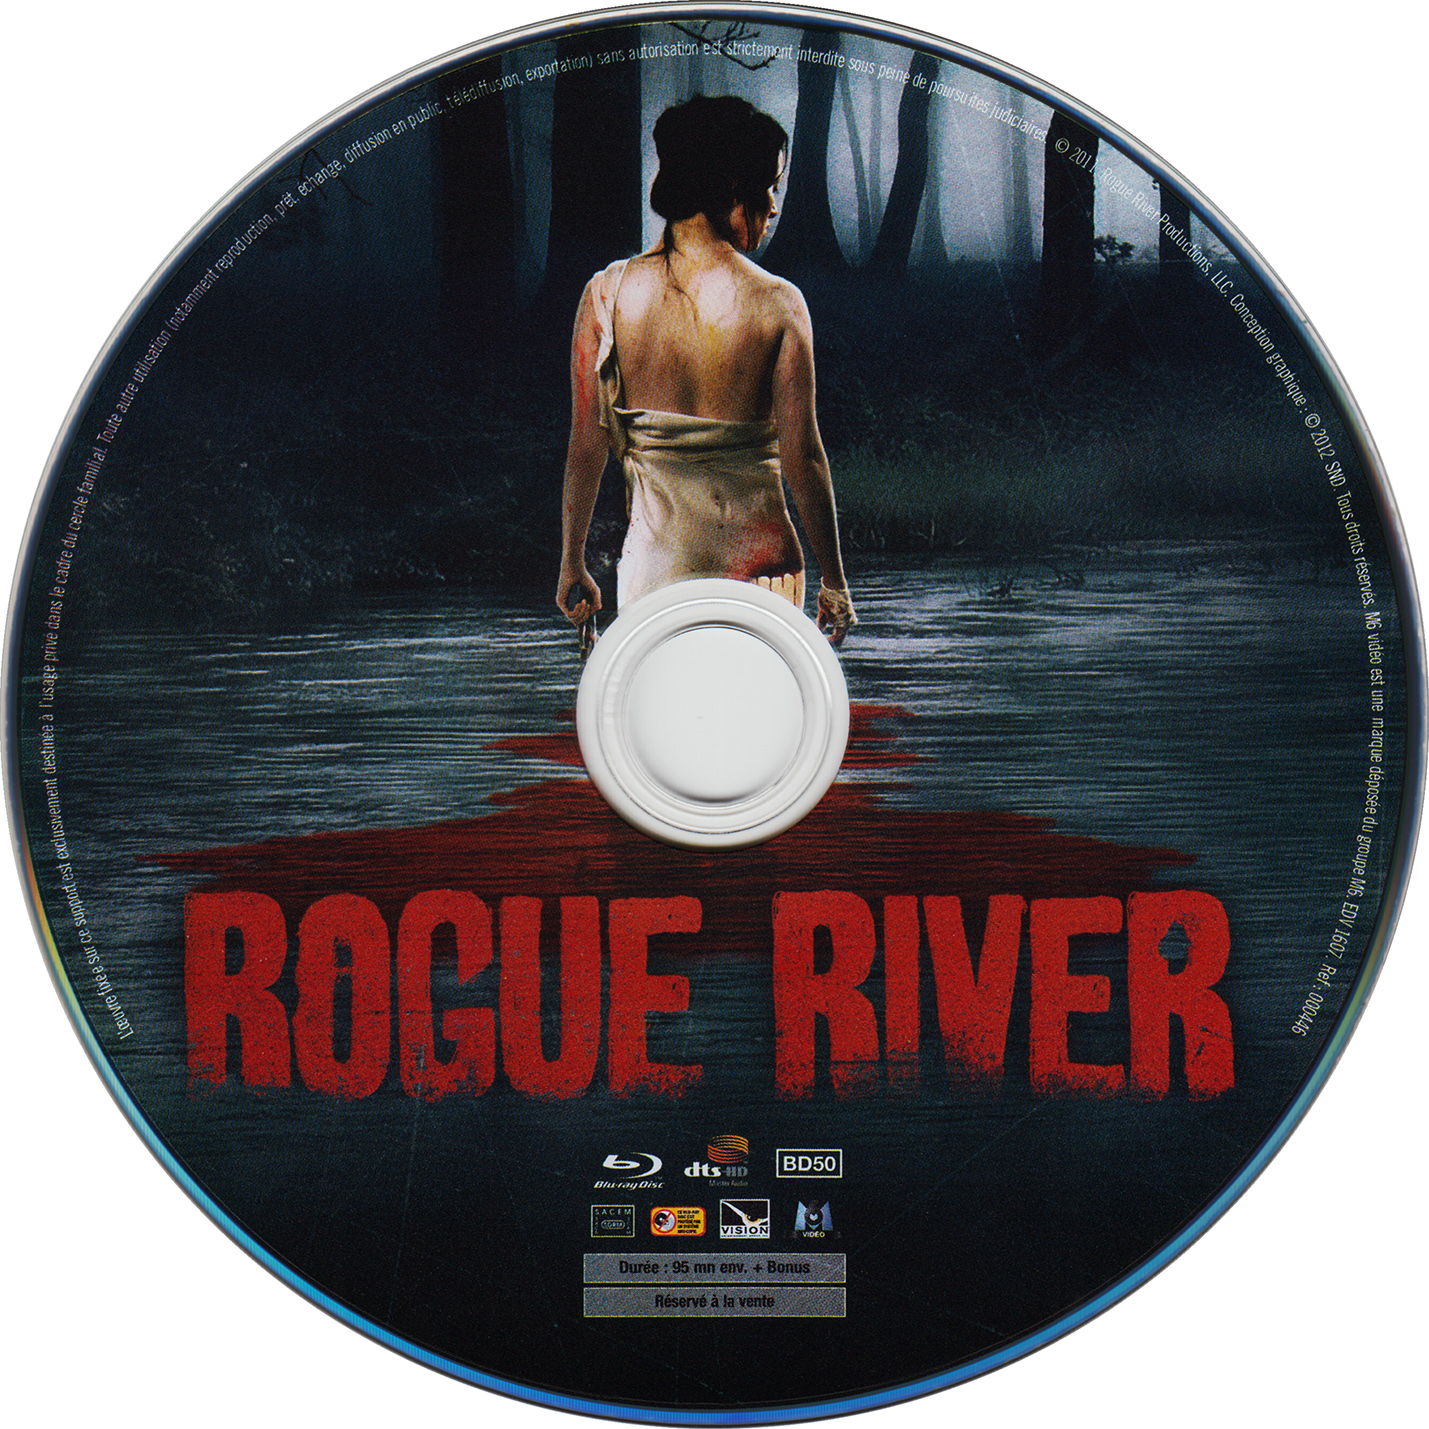 Rogue river (BLU-RAY)